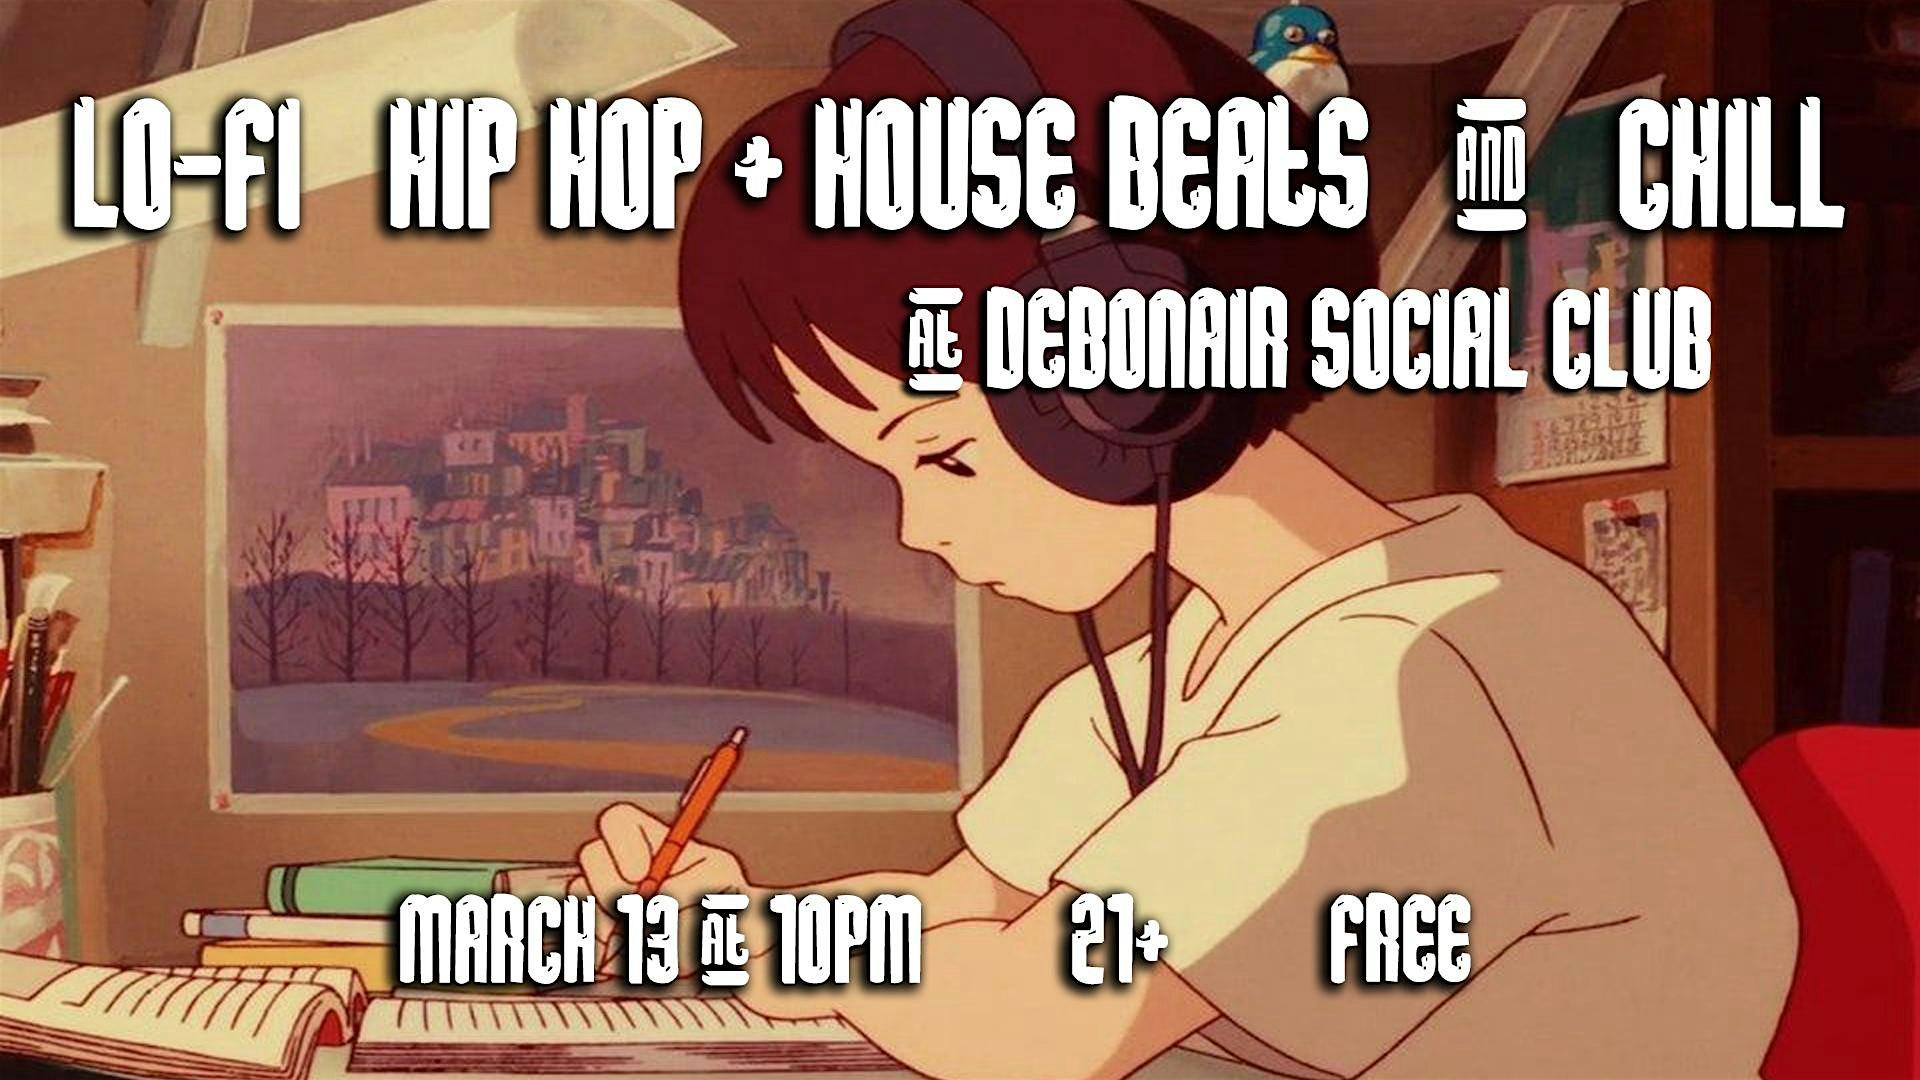 Lo Fi Hip Hop House Beats Chill Debonair Social Club Tickets